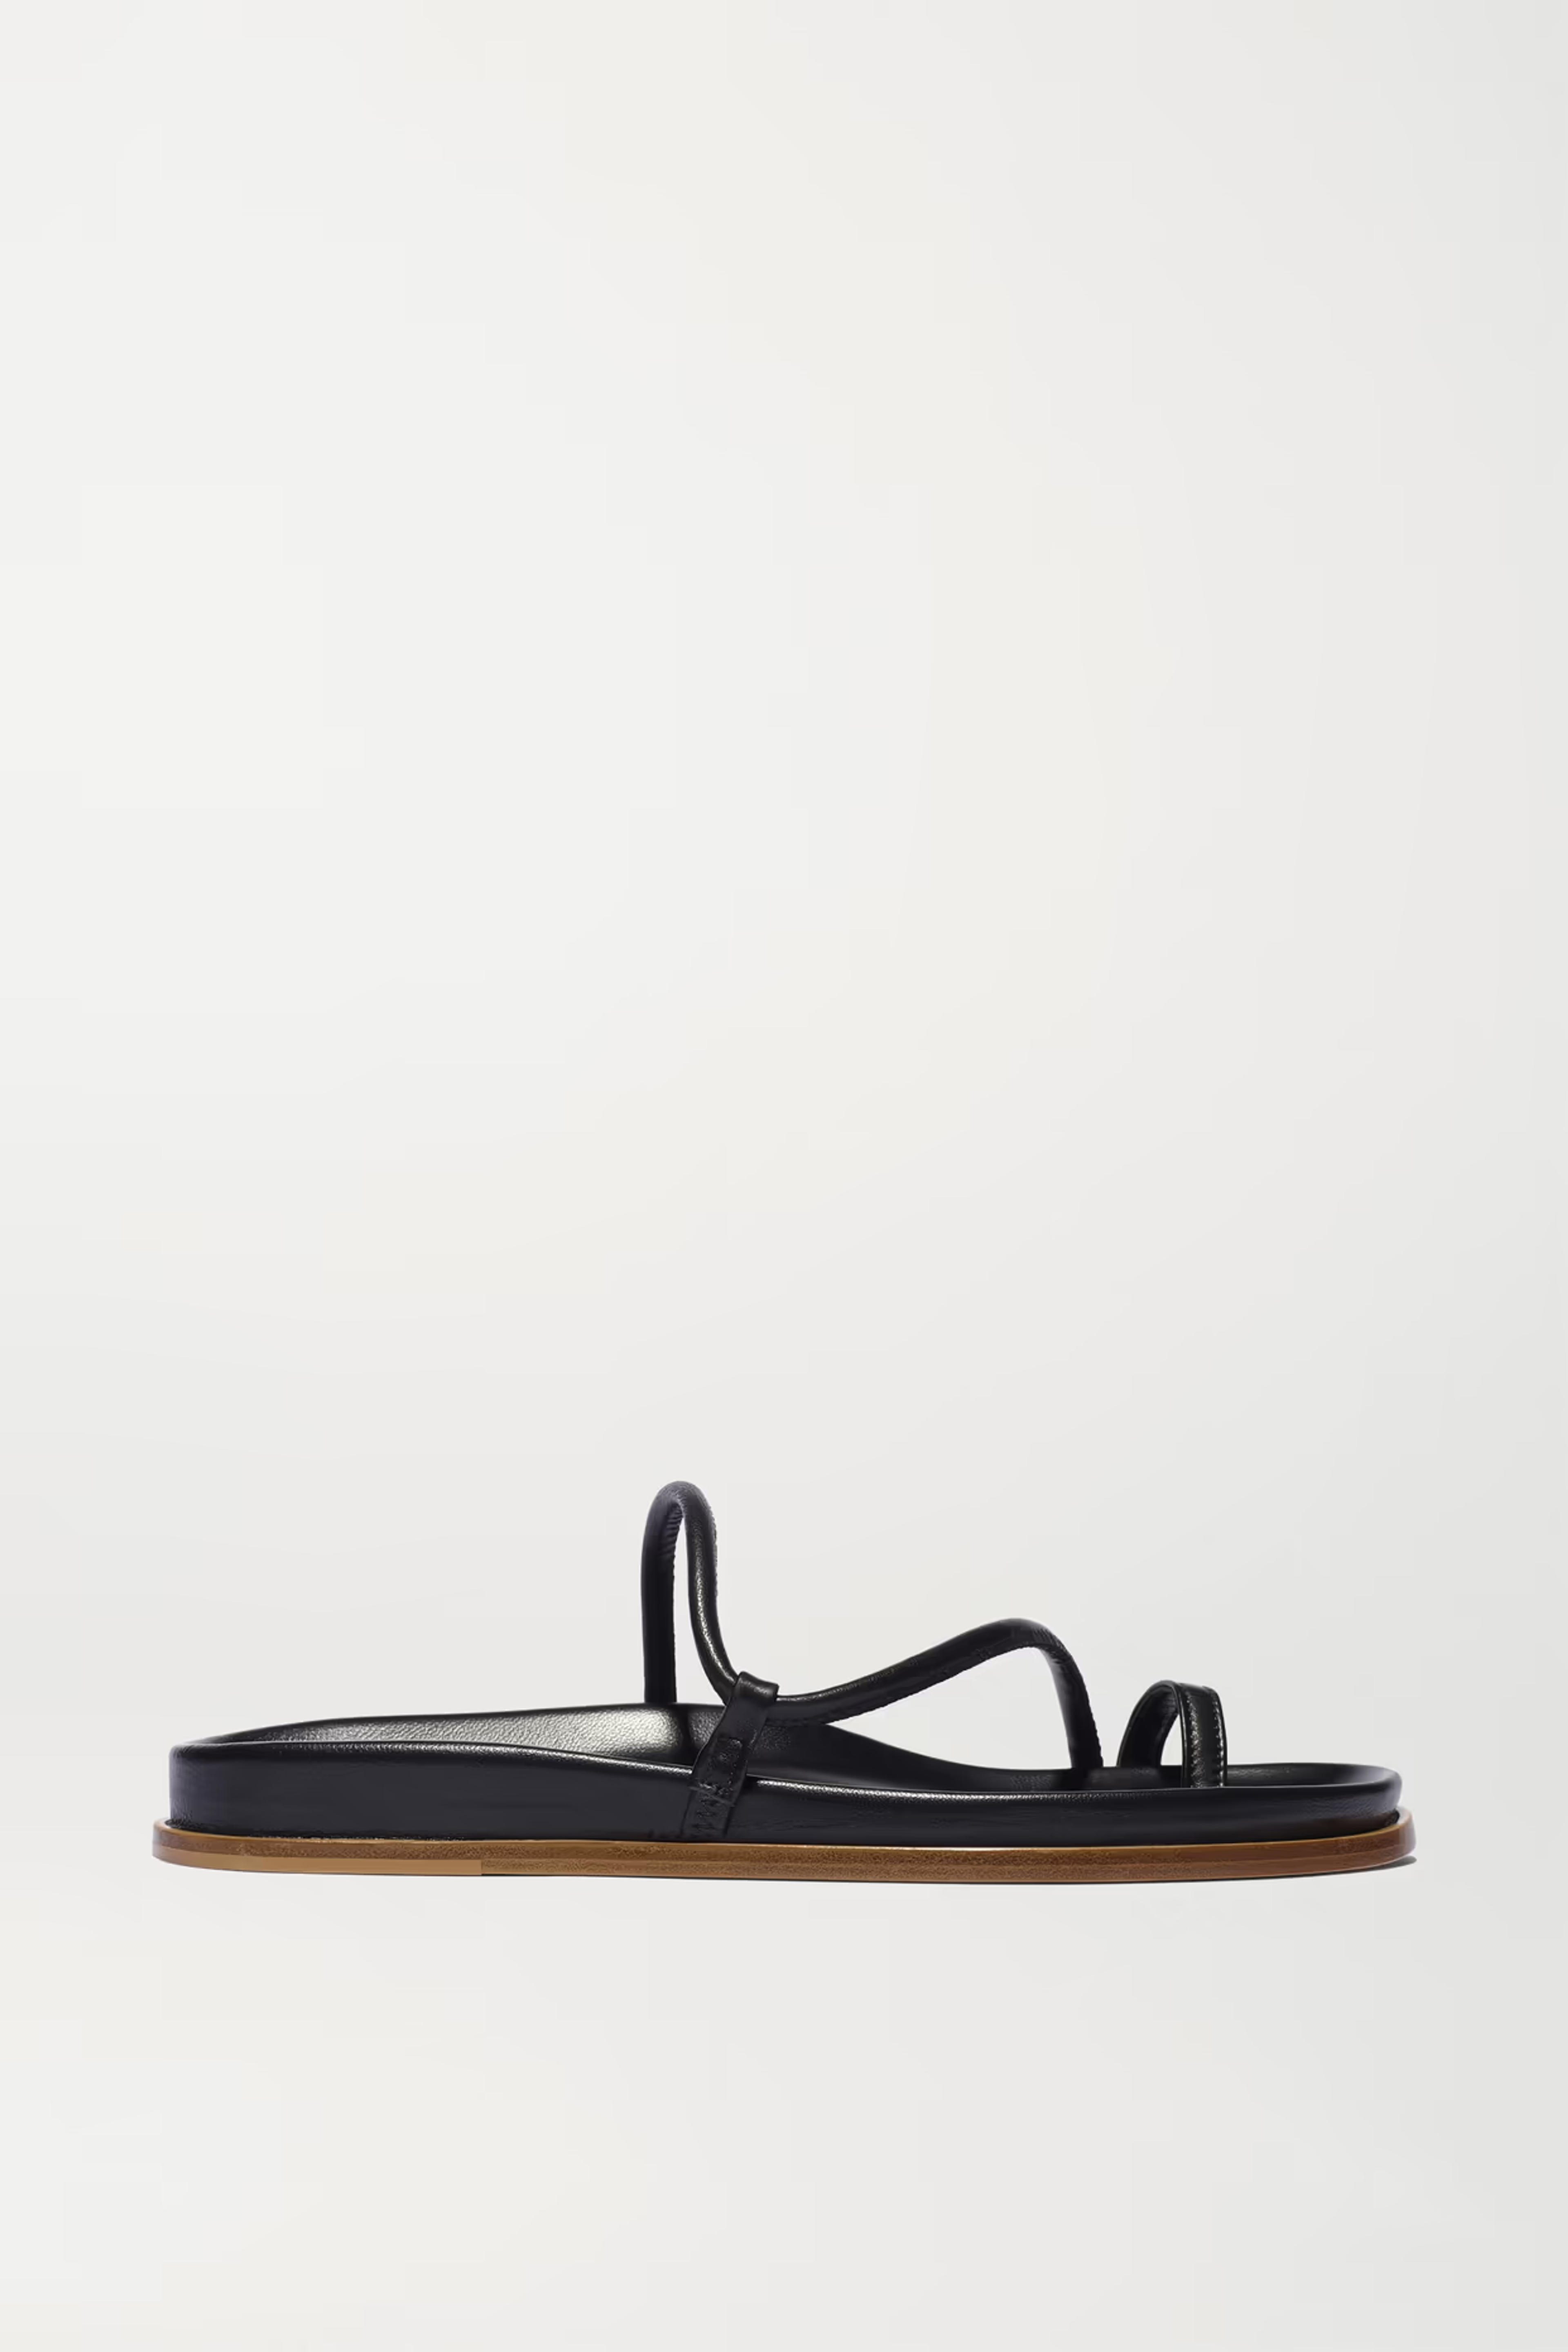 EMME PARSONS - Bari leather sandals